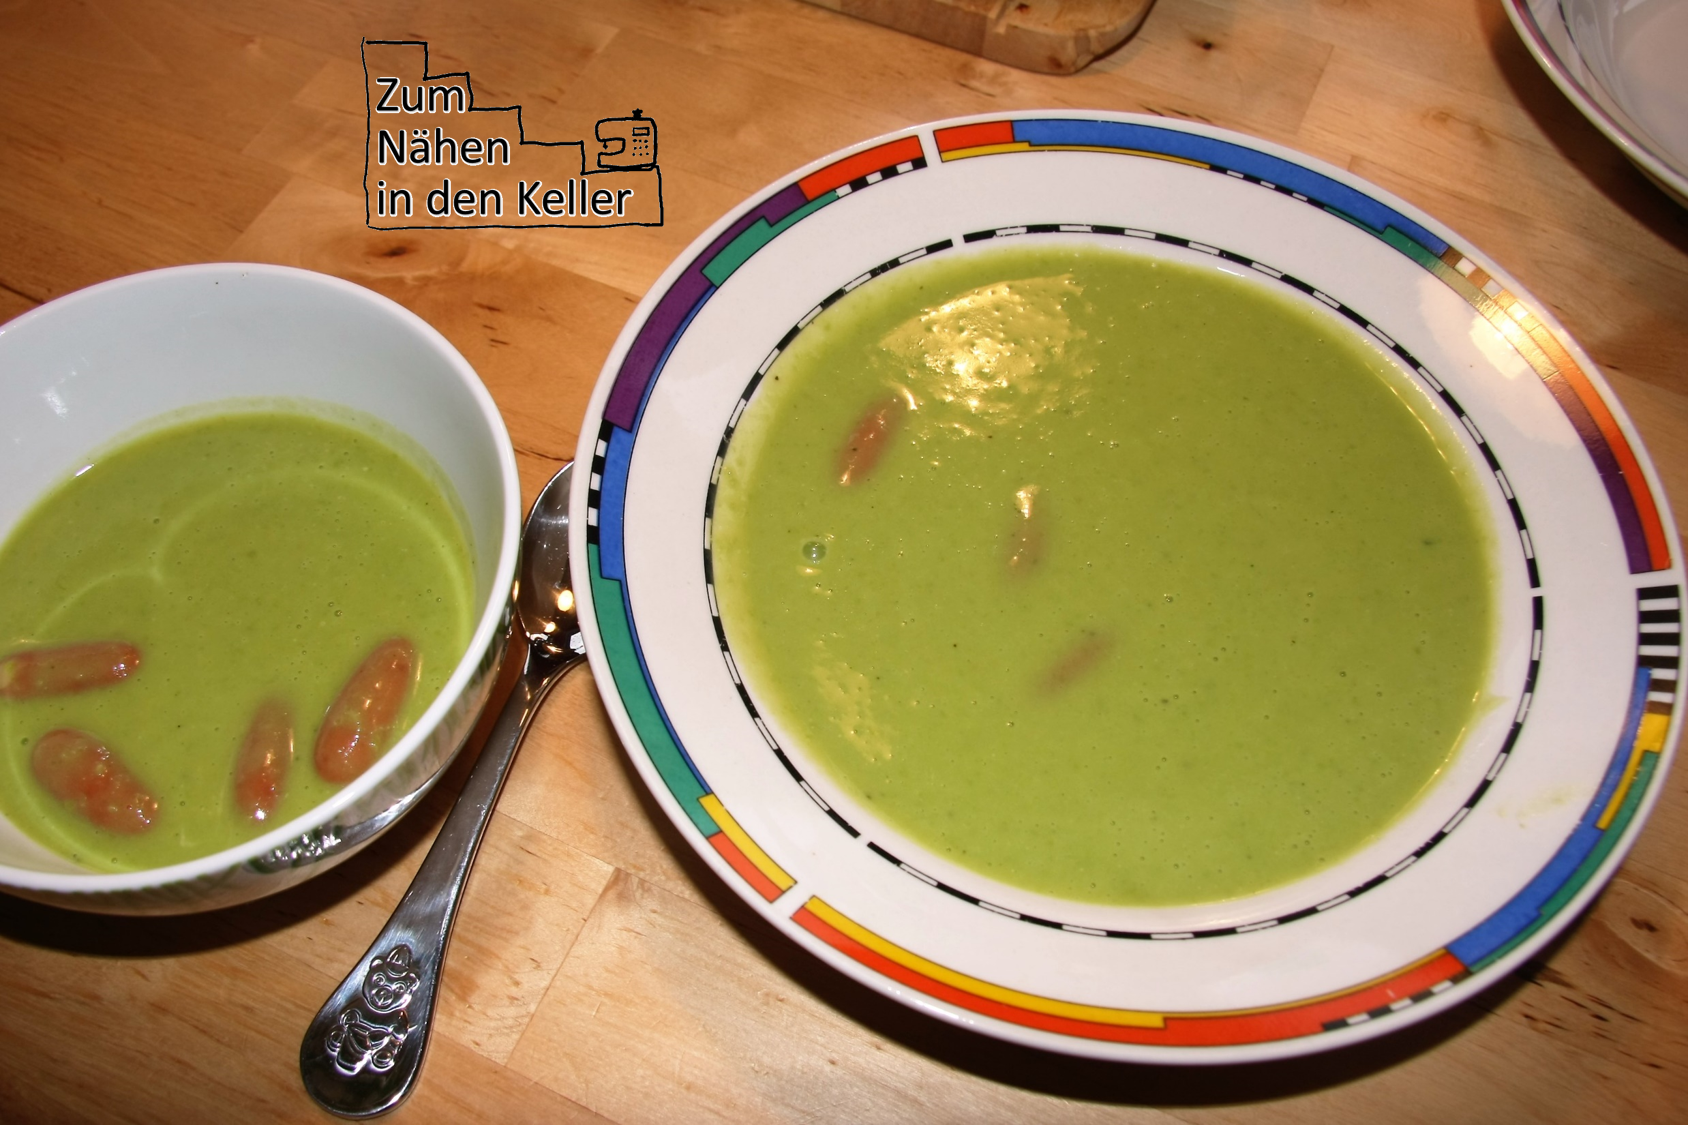 Grüne Suppe – Zum Nähen in den Keller